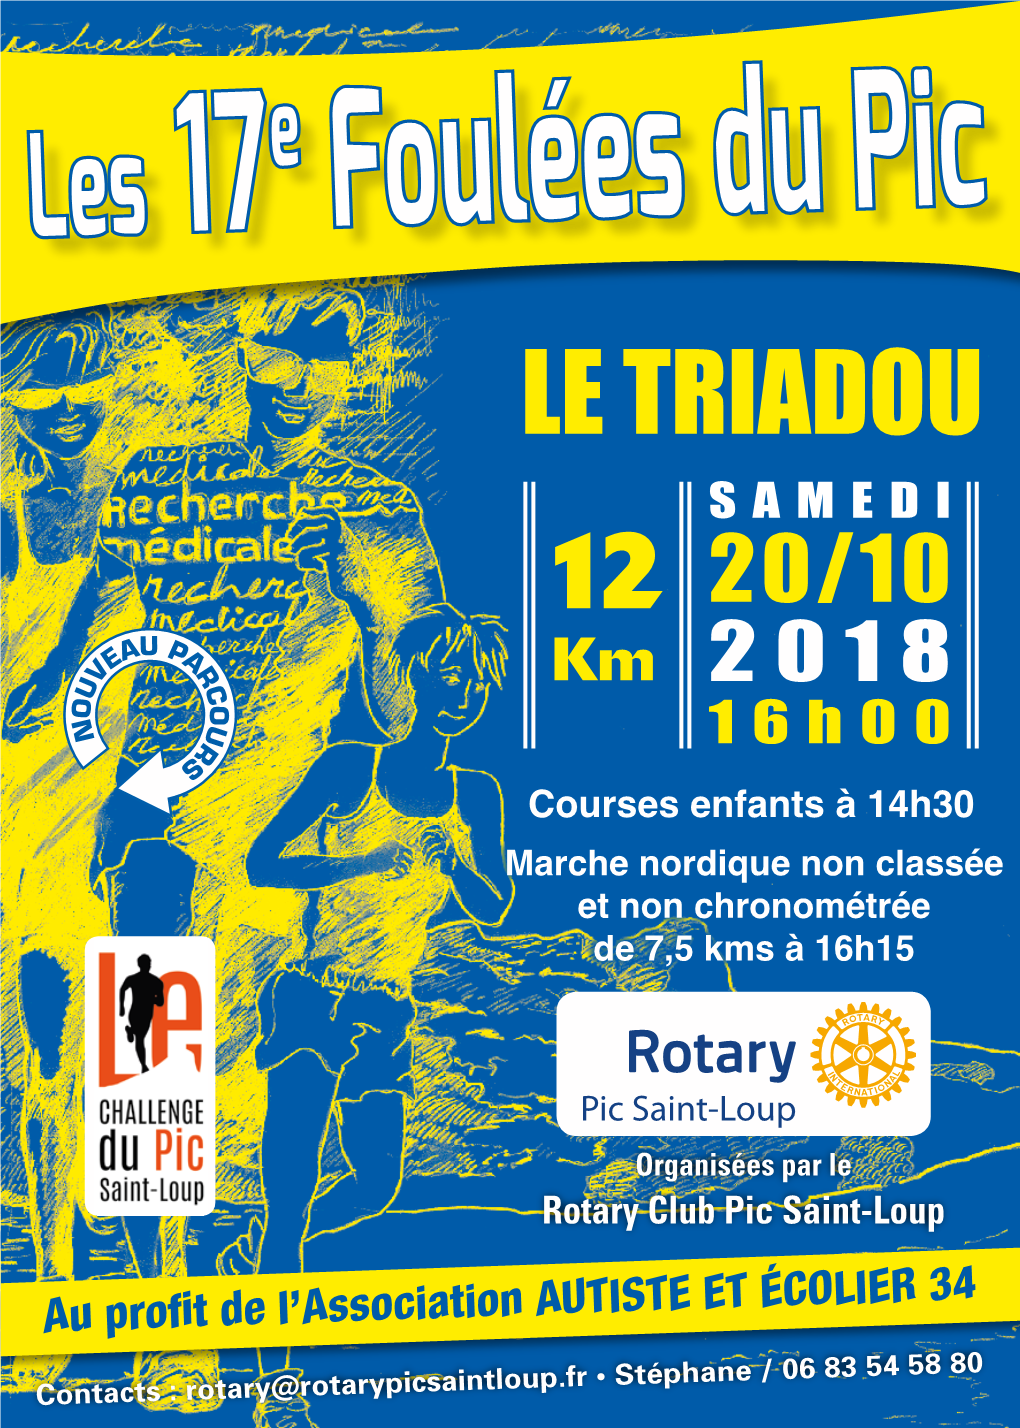 Rotary Club Pic Saint-Loup